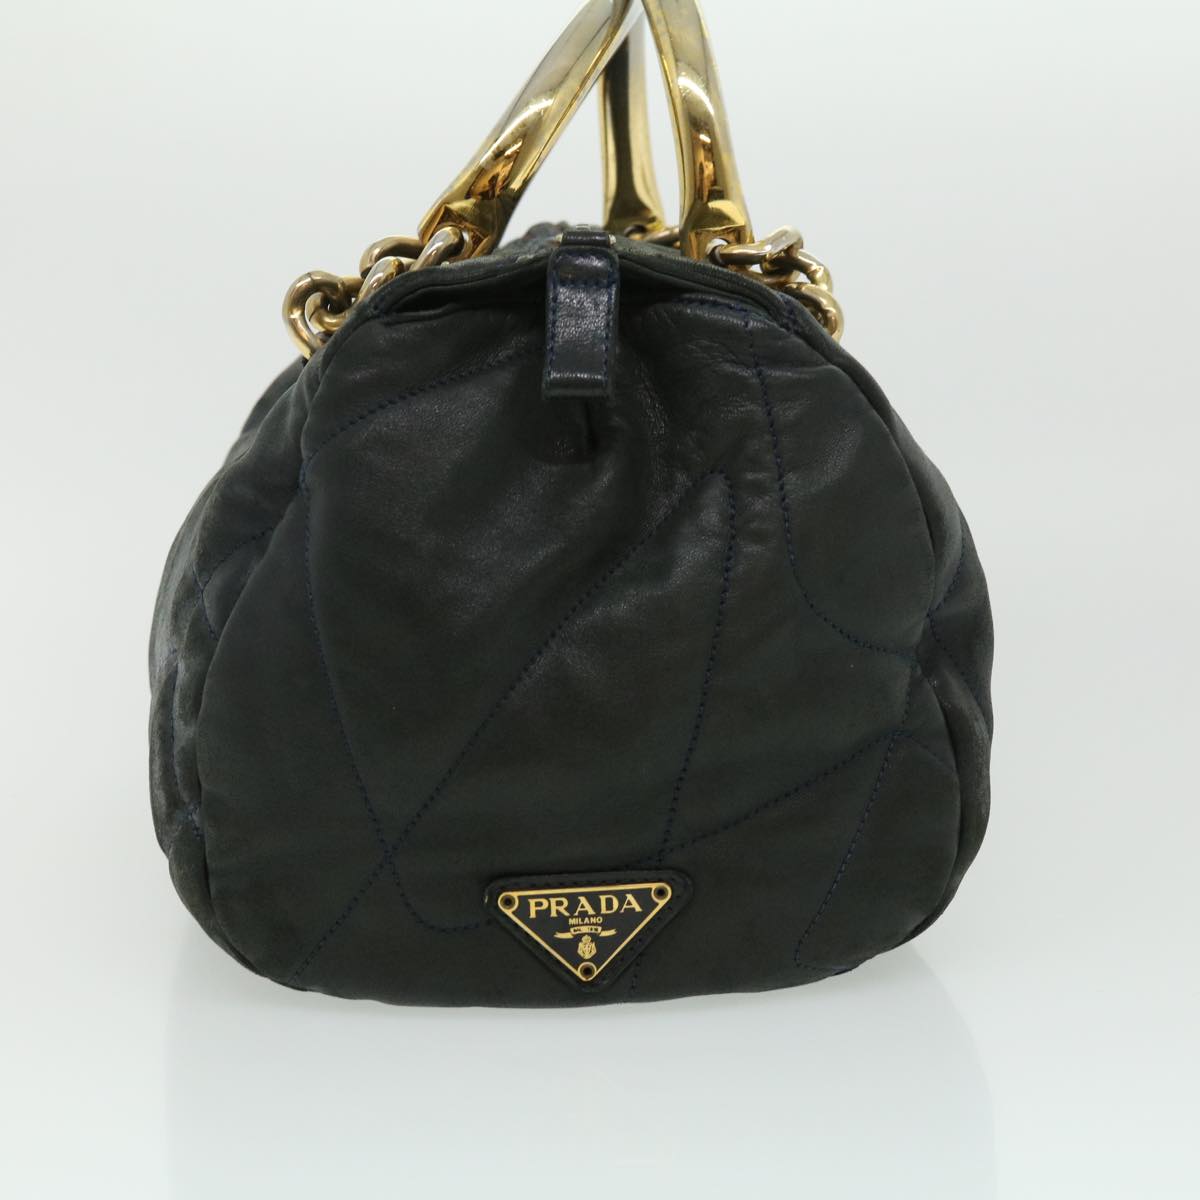 PRADA Quilted Hand Bag Leather Black Auth im370